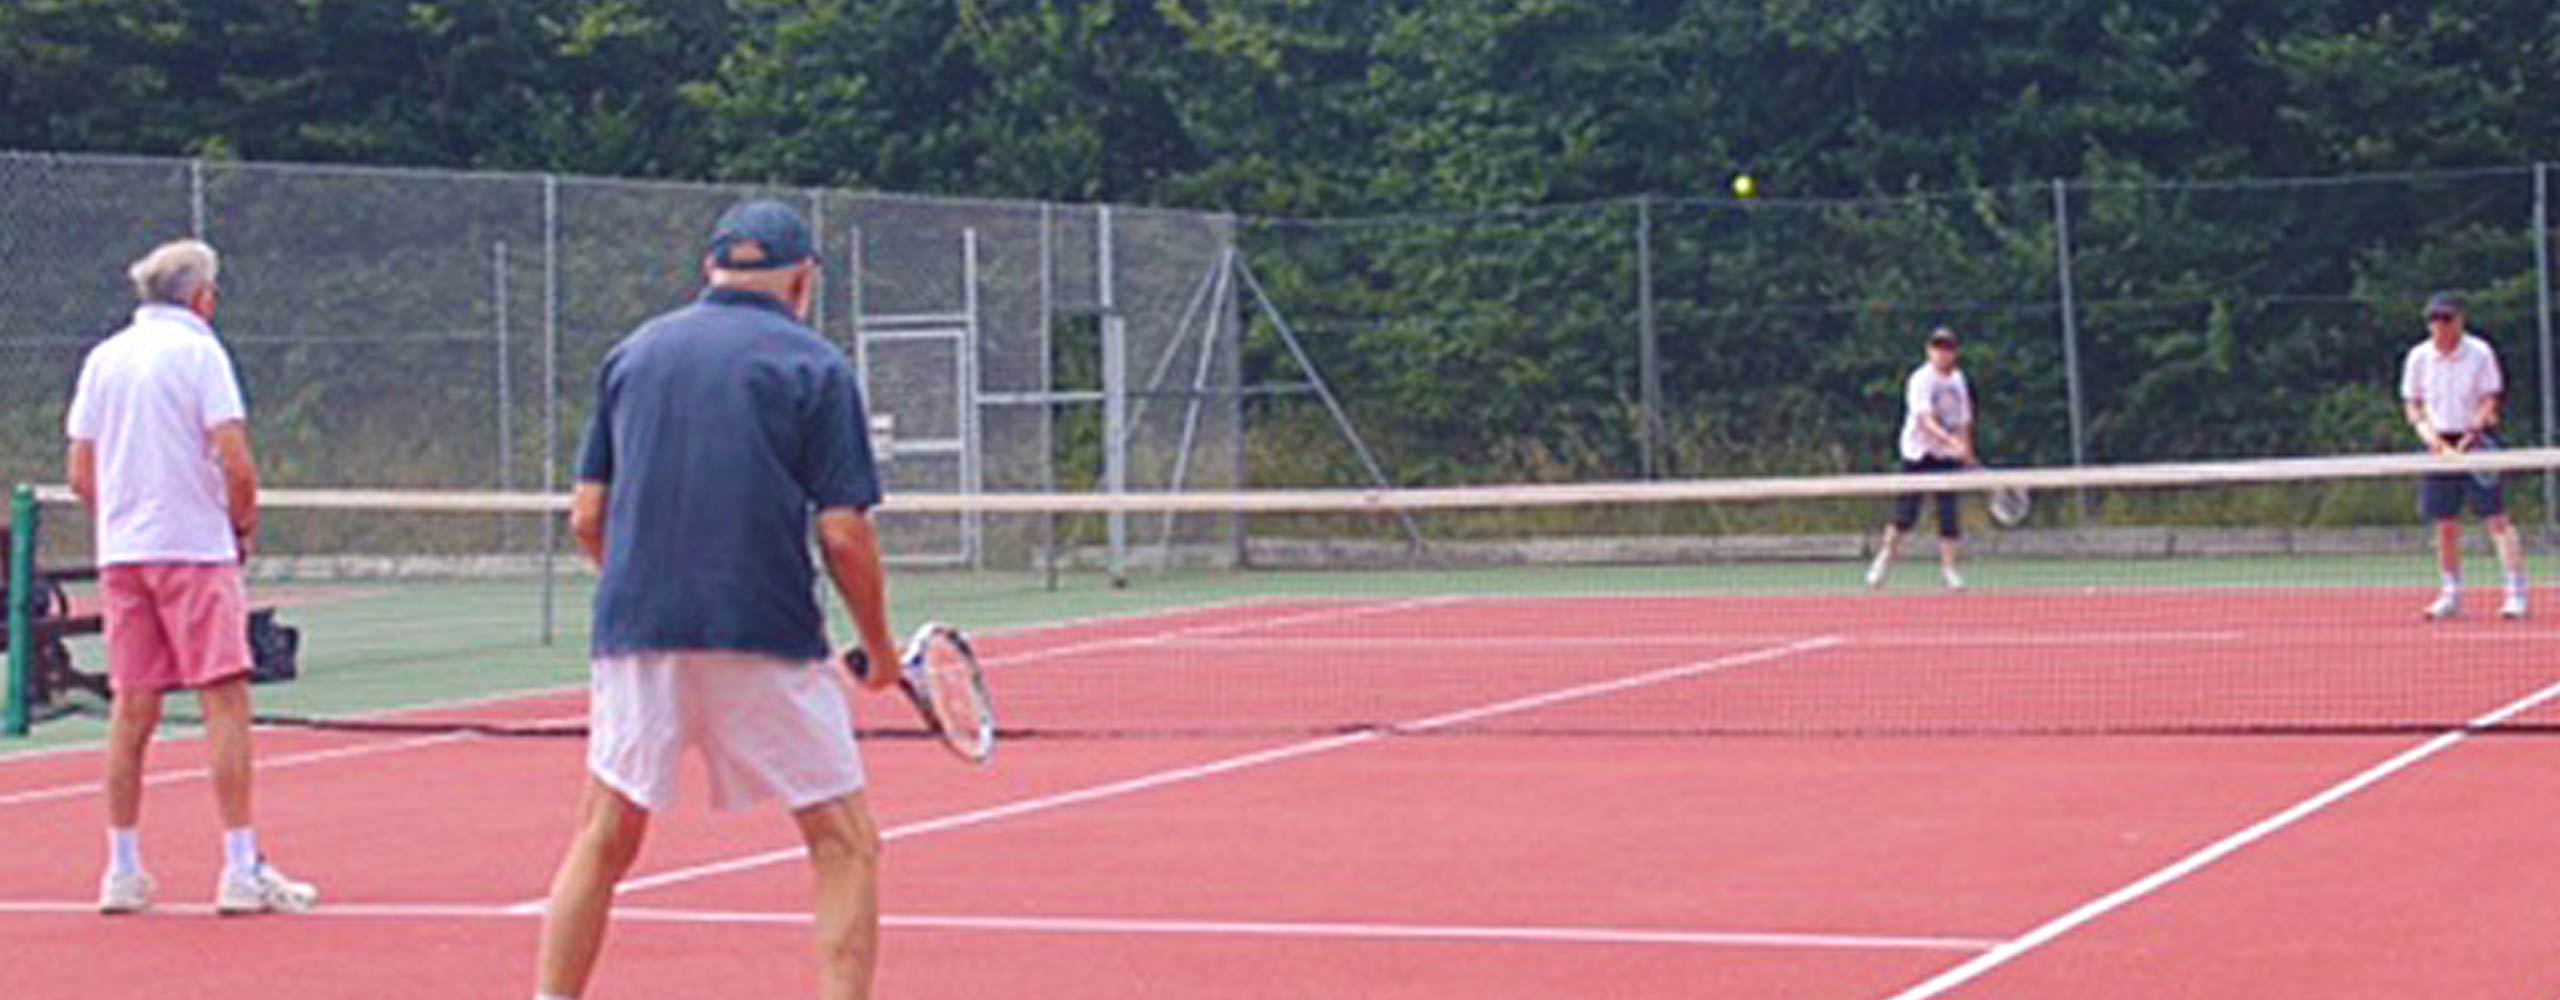 Tennis courts at Newport Pembrokeshire